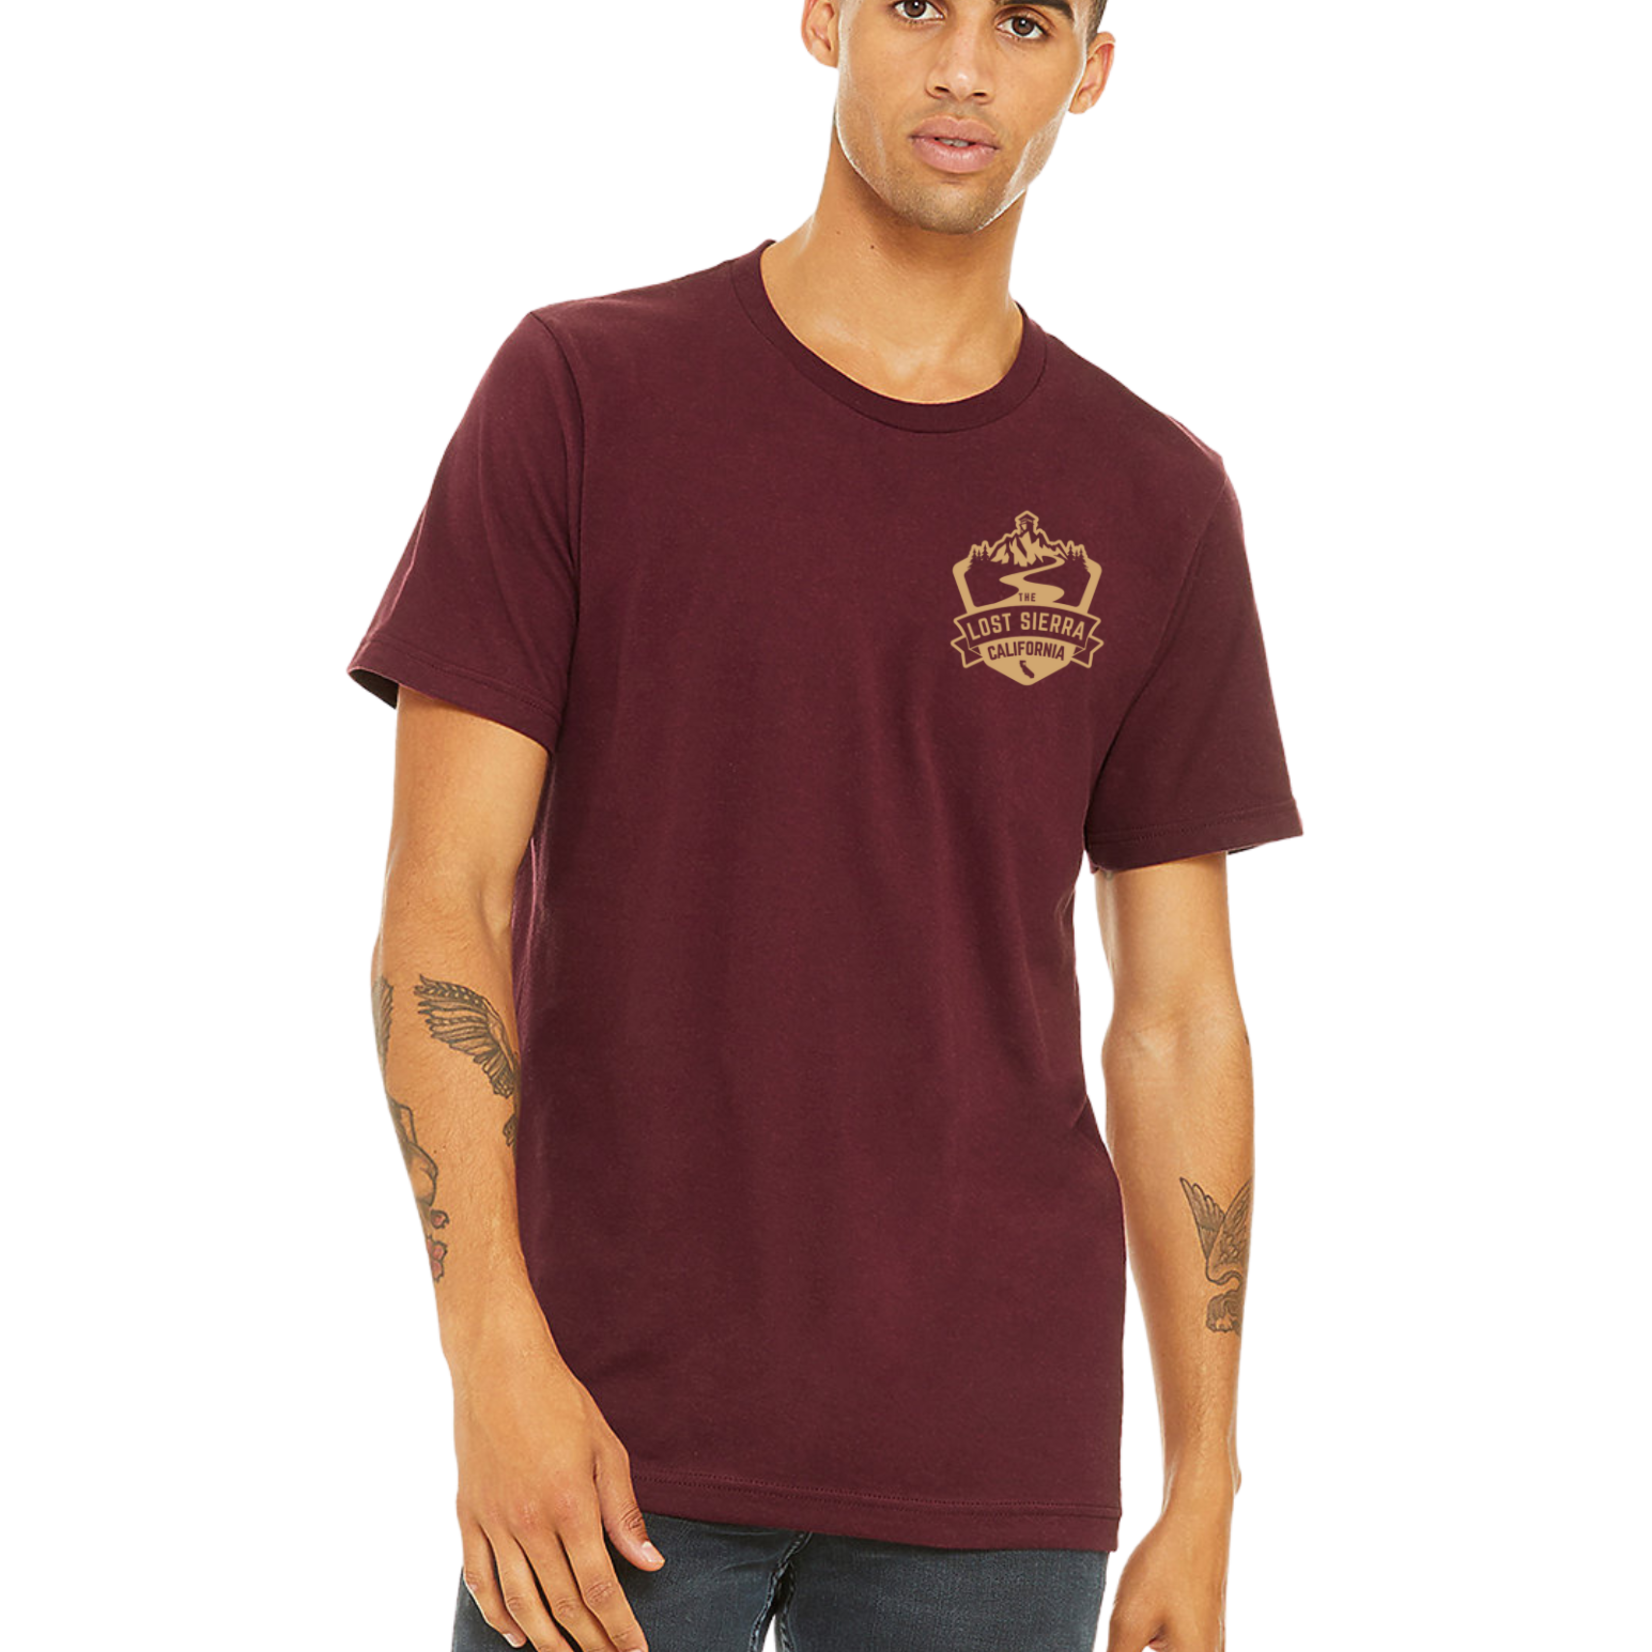 SHIRT - The Lost Sierra CA T-Shirt